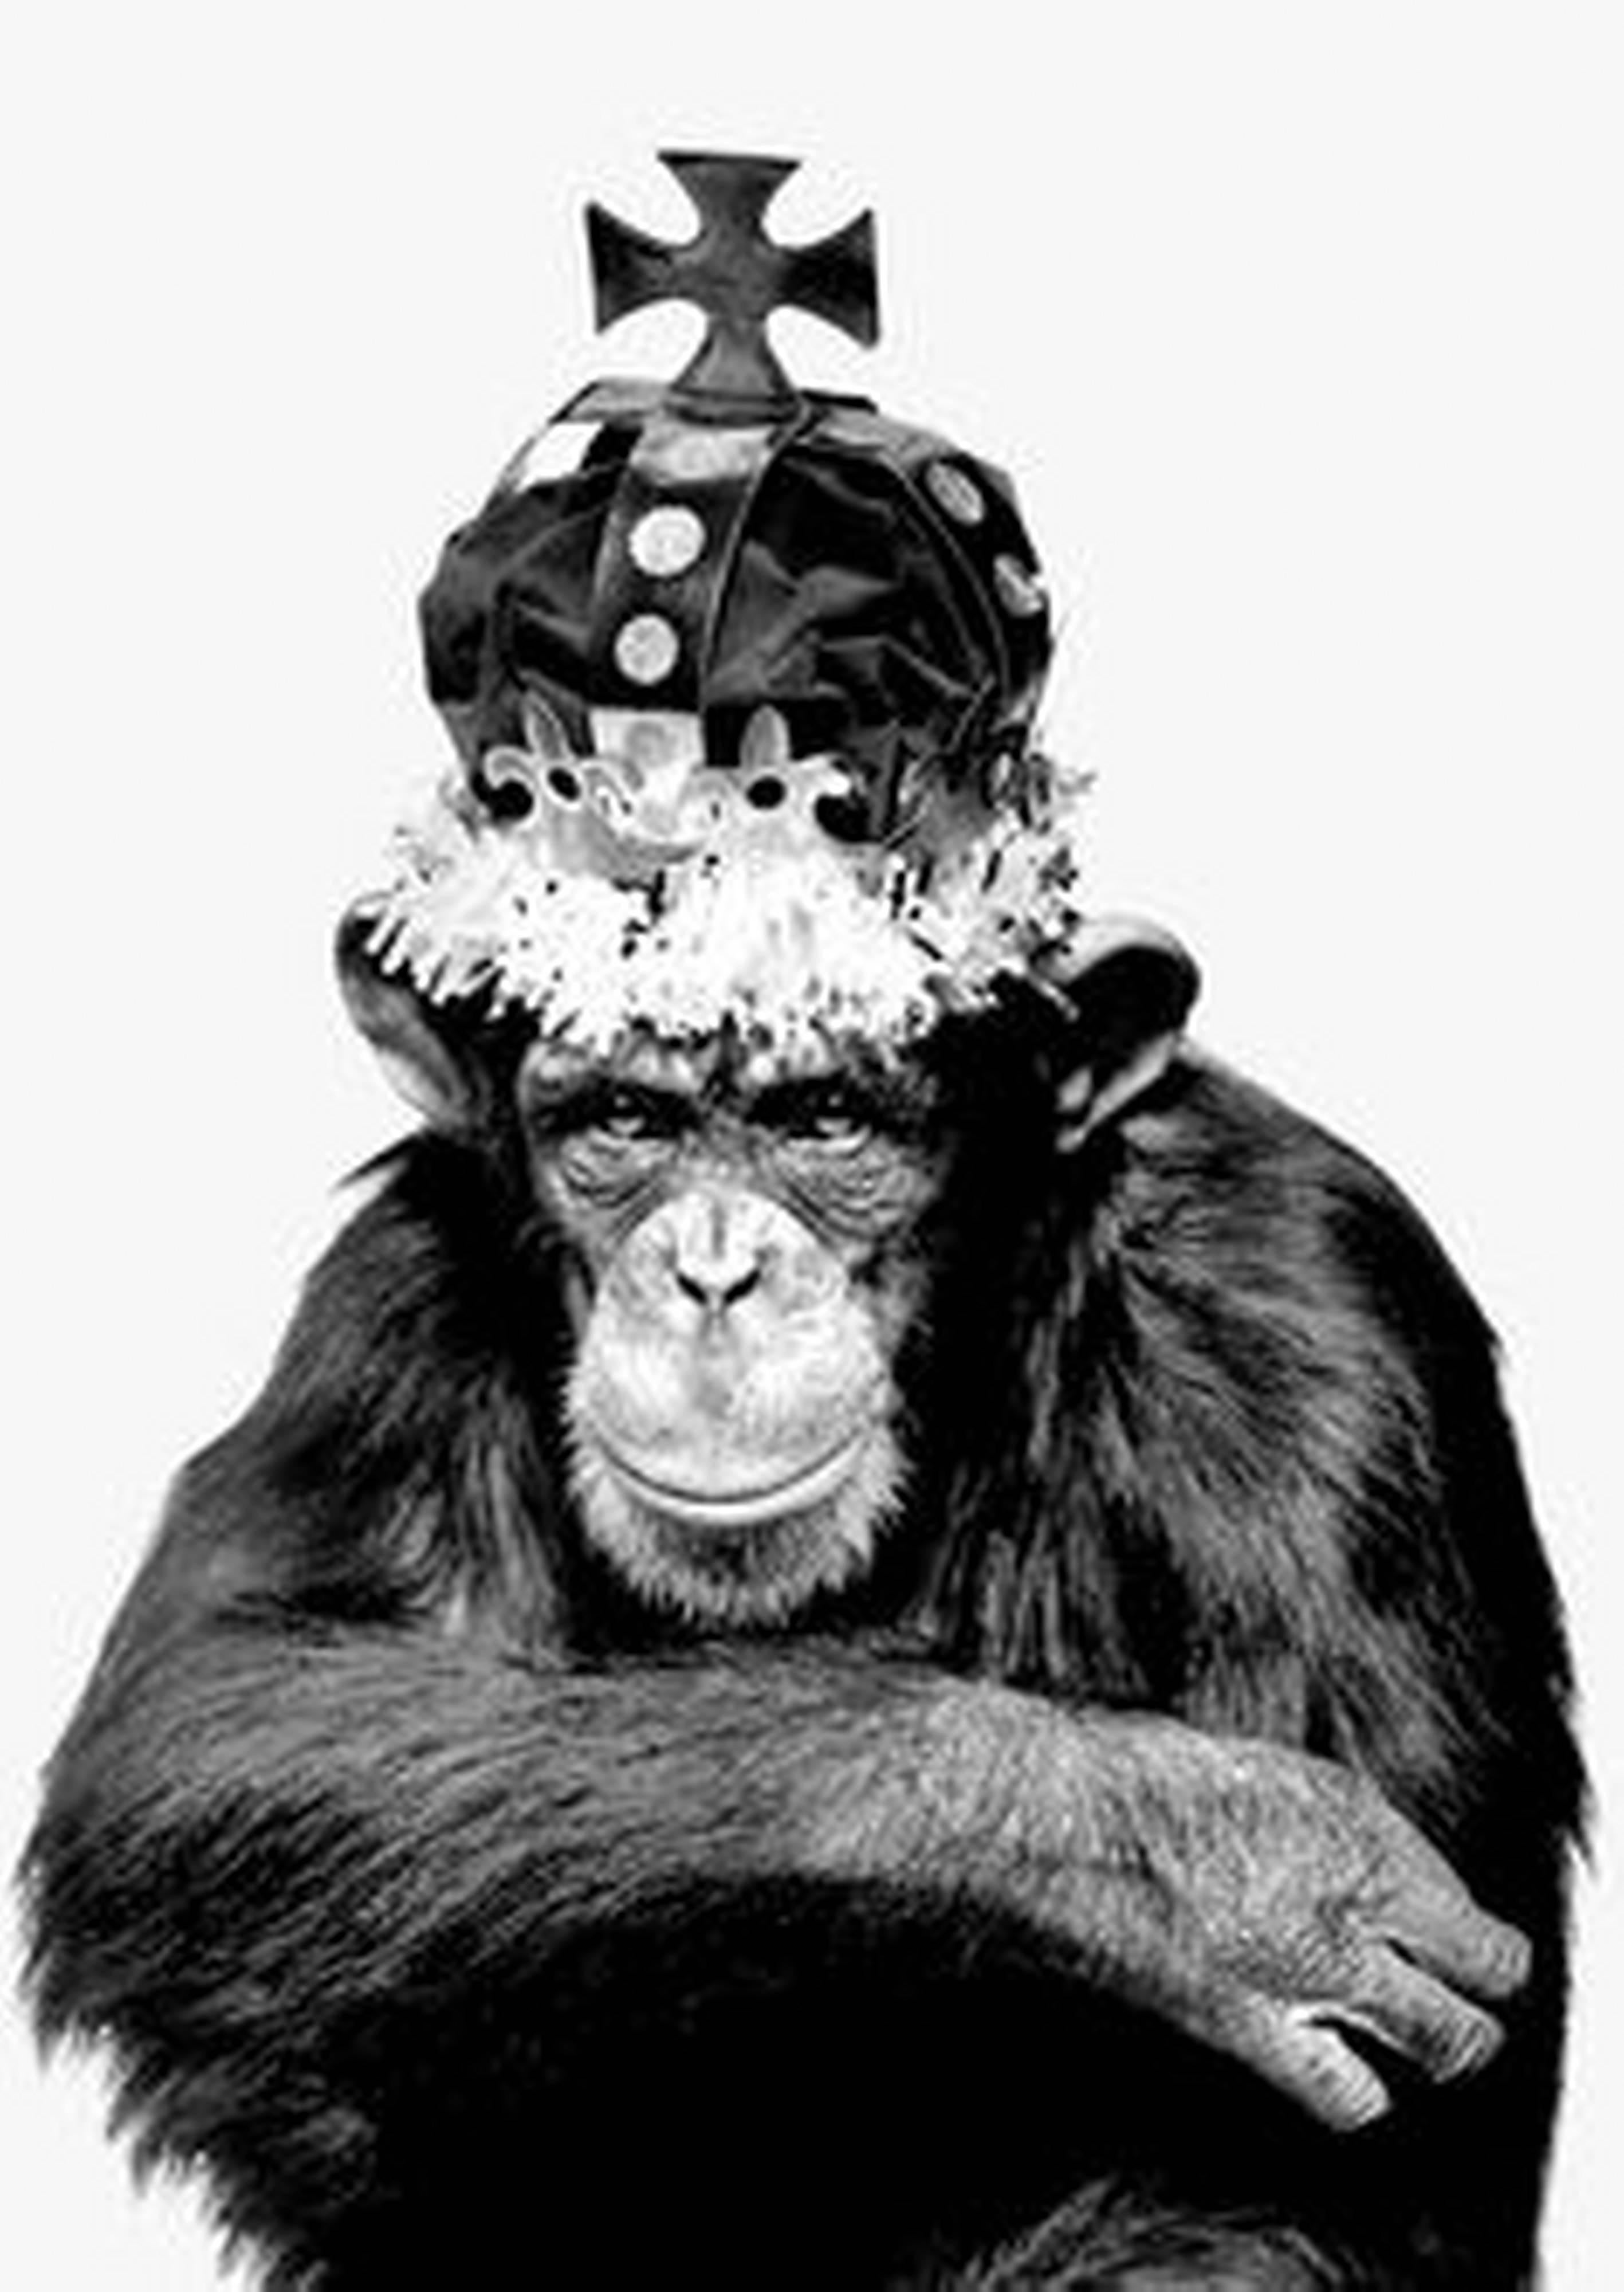 Albert Watson Black and White Photograph - Monkey Series - Monkey King